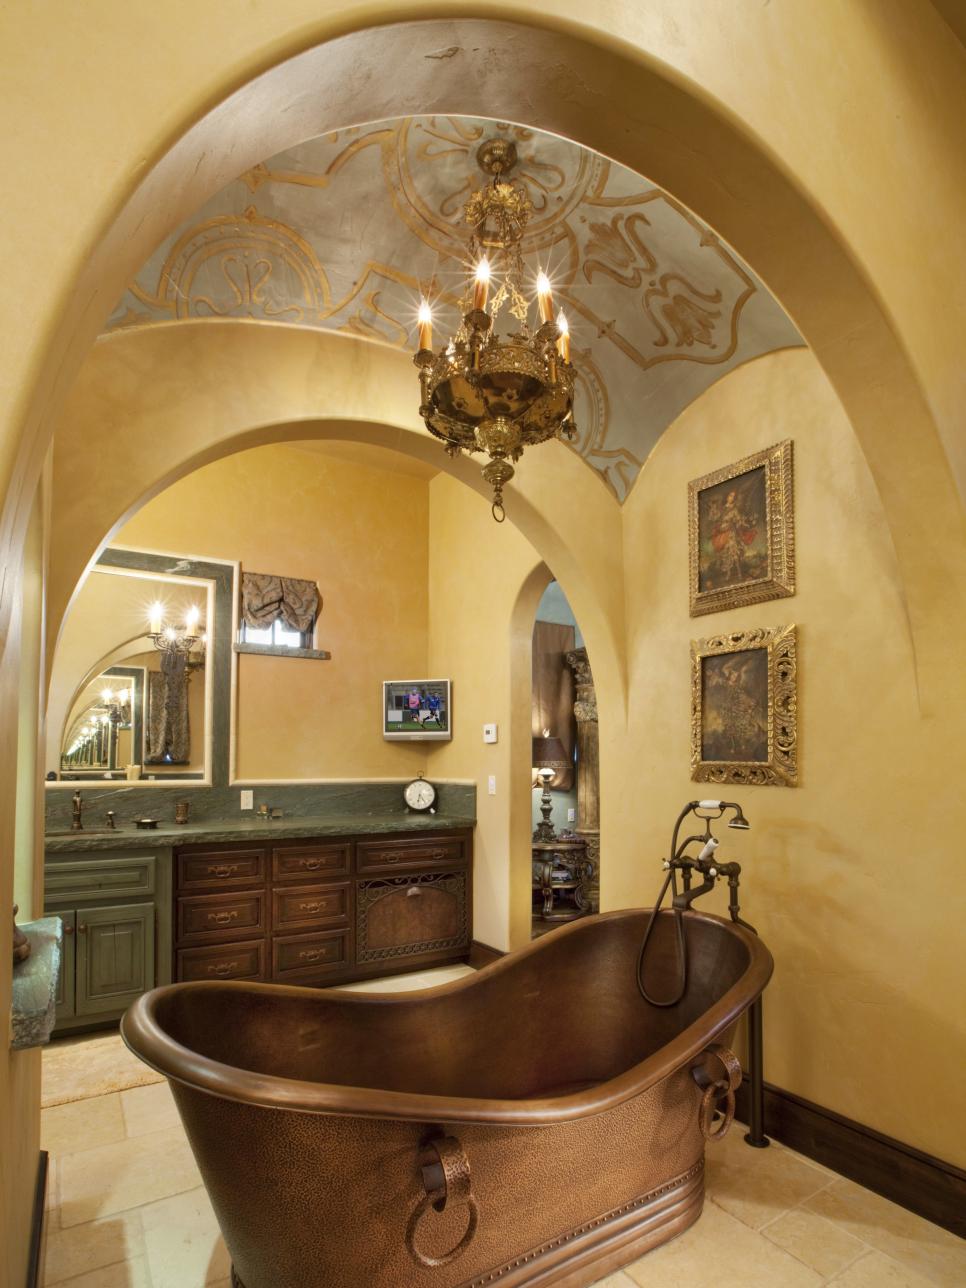 Copper Bathtub in Elegant Bathroom With Painted Ceiling